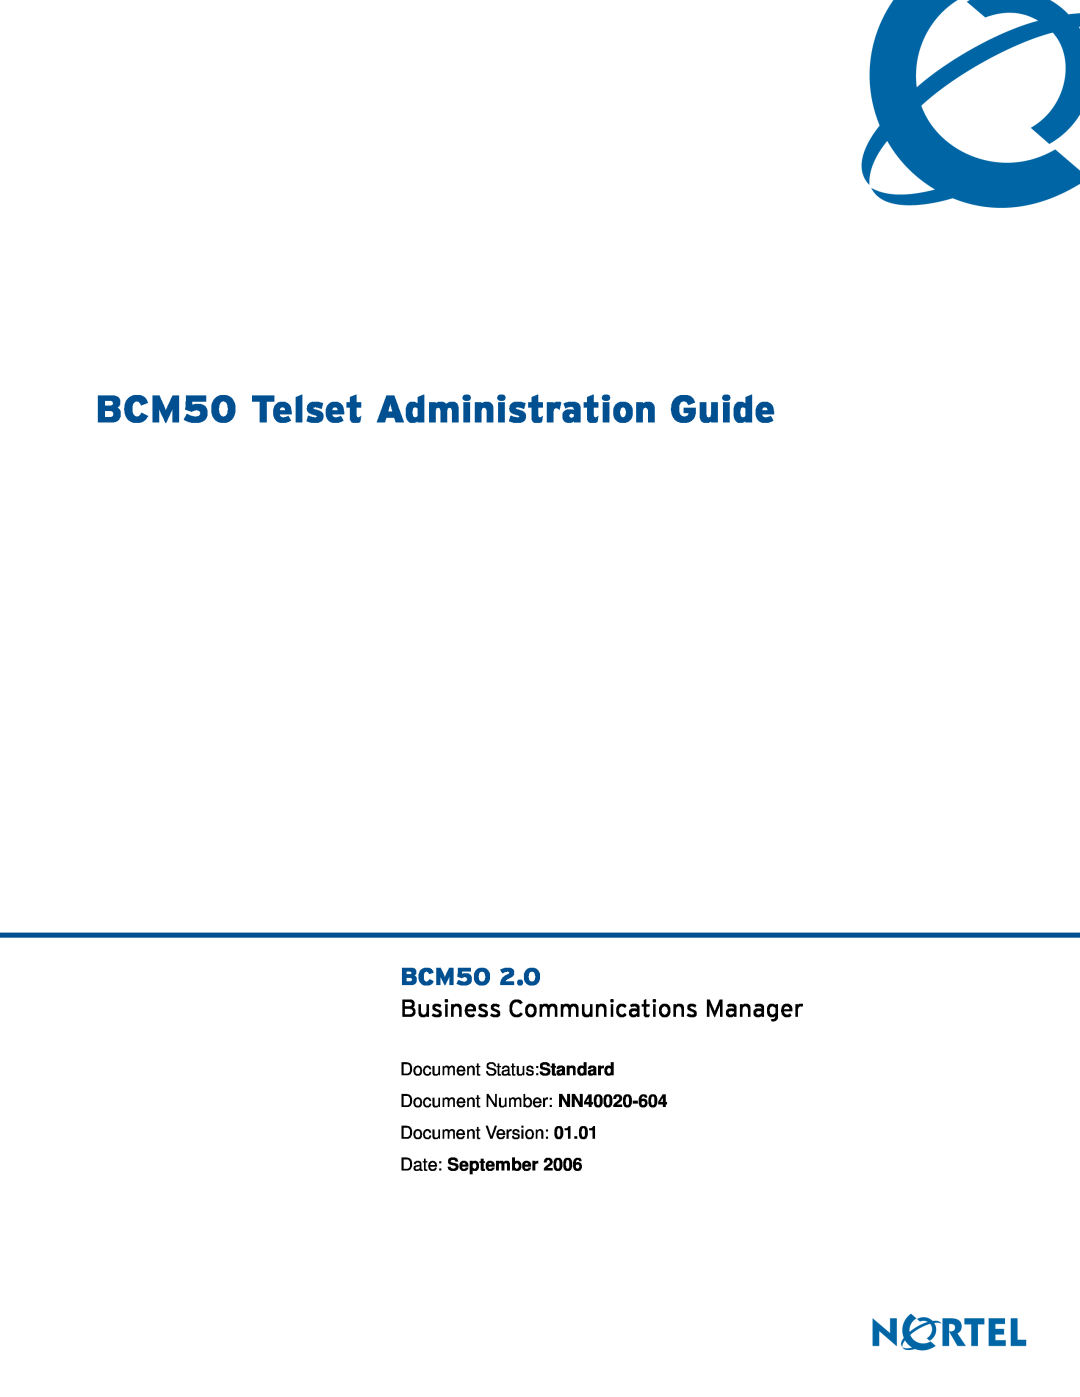 Nortel Networks BCM50 2.0 manual BCM50 Telset Administration Guide, Business Communications Manager, Date September 